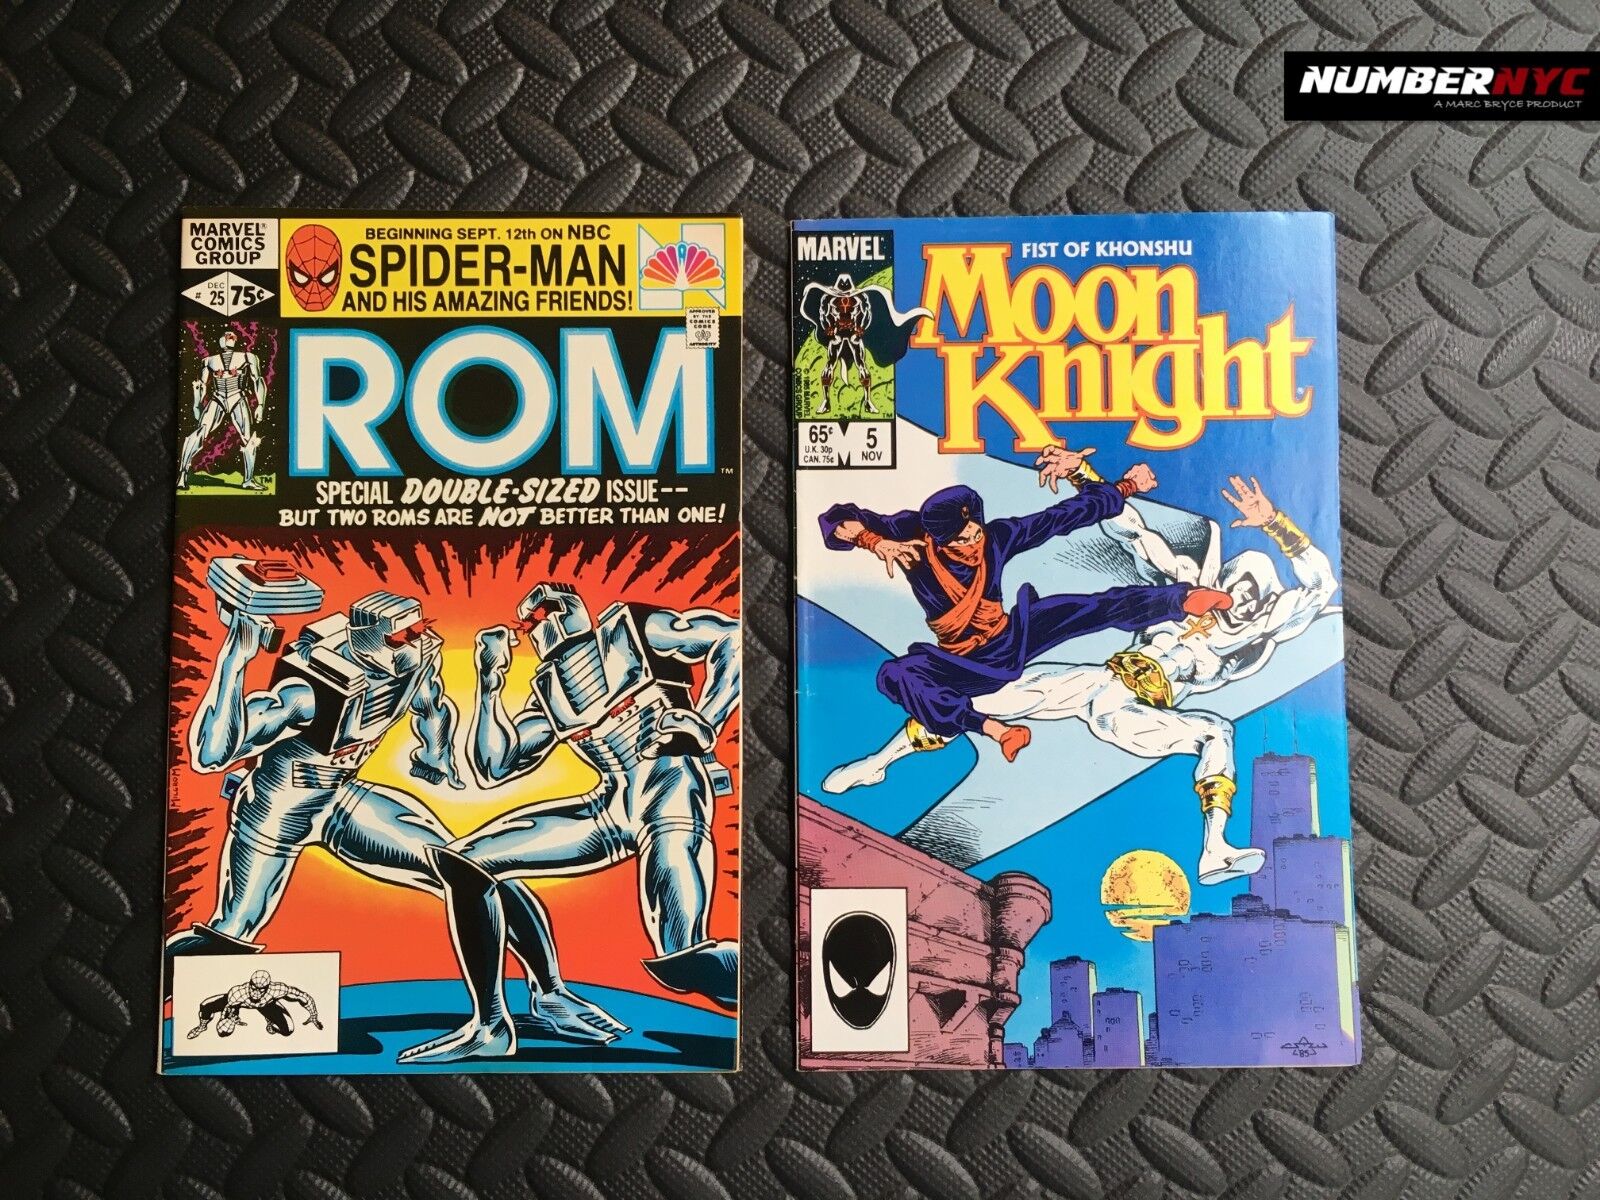 Marvel Old Vintage Comics ROM 1979 DEC 25 & MOON KNIGHT 1985 NOV 5